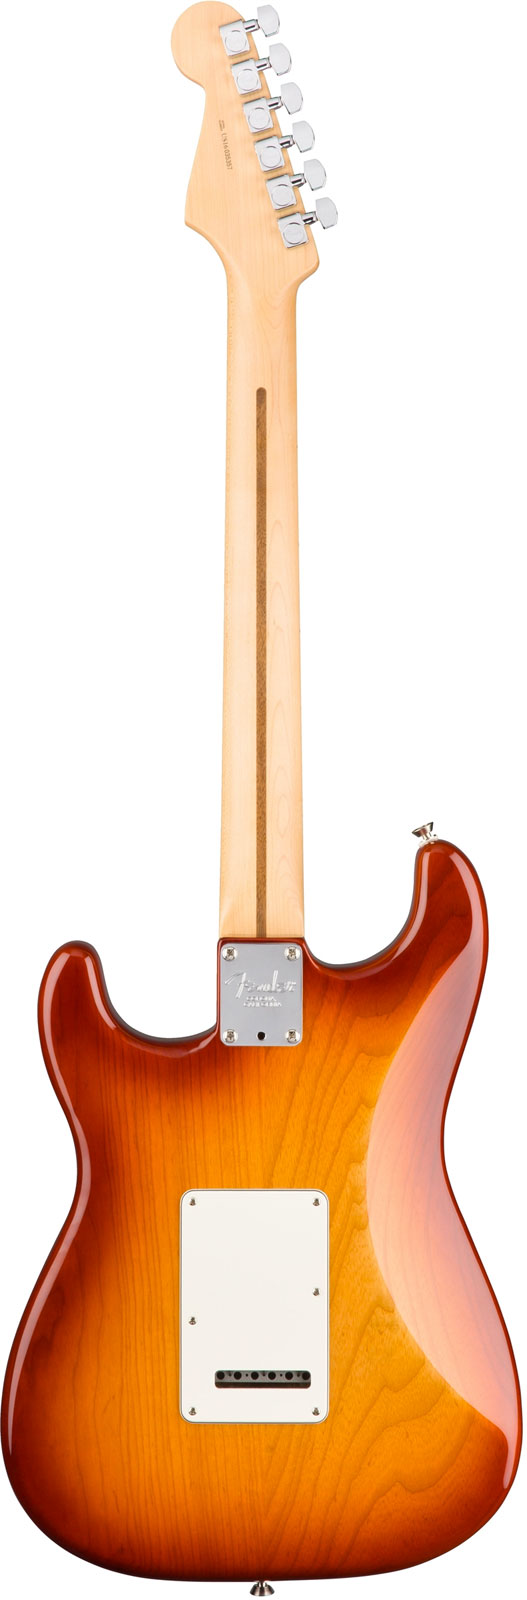 Fender Strat American Professional 2017 3s Usa Mn - Sienna Sunburst - Guitare Électrique Forme Str - Variation 2